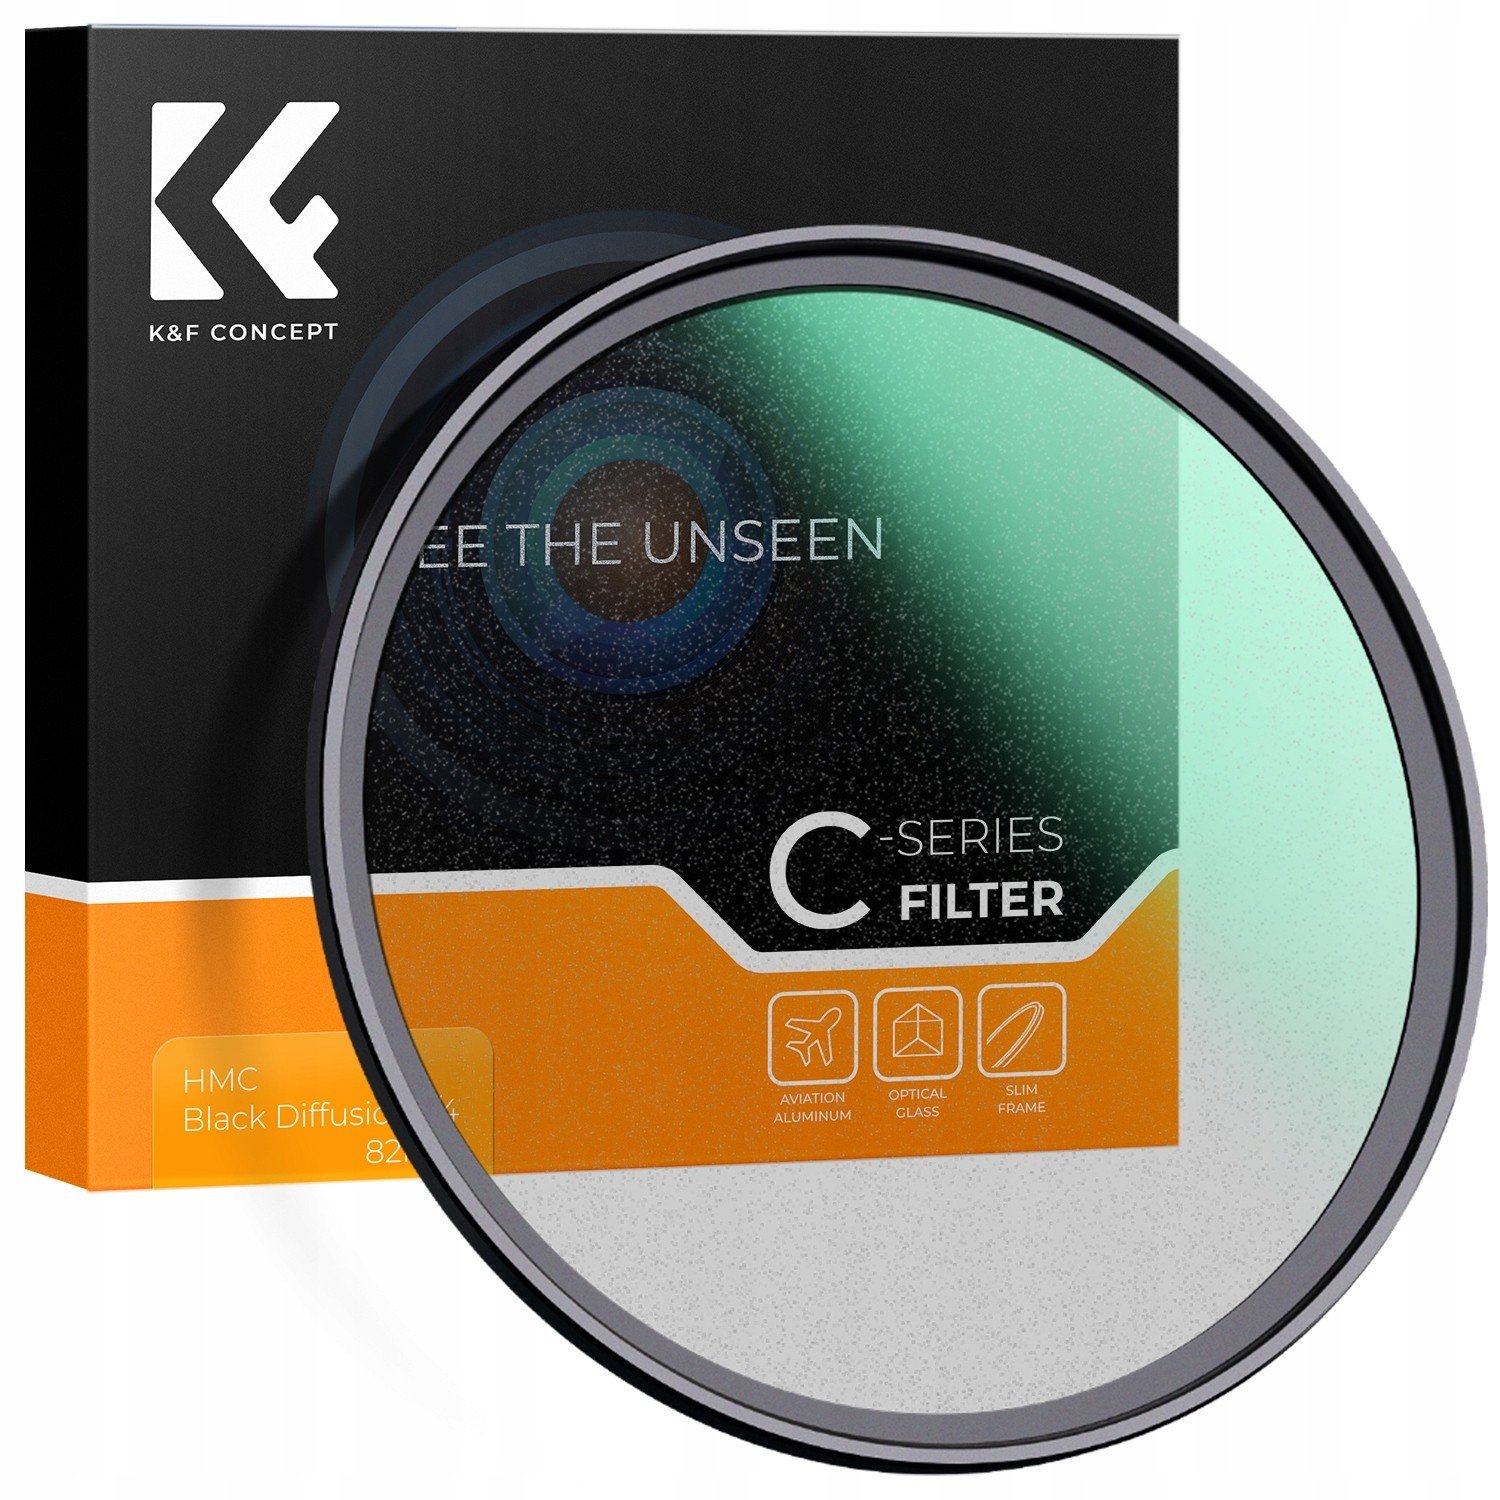 Difuzní filtr Black Mist 1/4 49mm Nano-C K&f